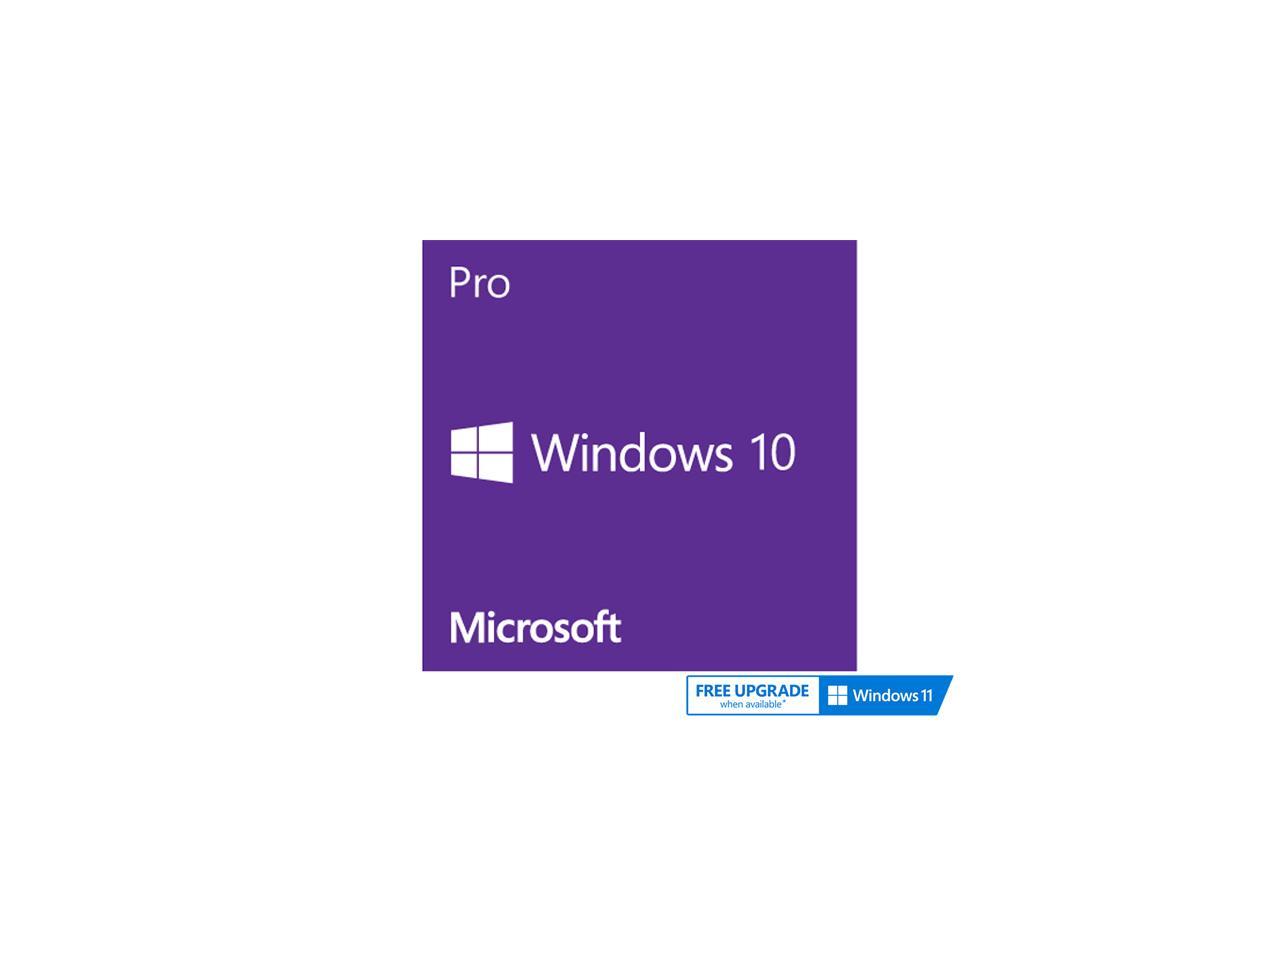 MS Windows 10 Pro Professional 32/64bit✔Vollversion✔Key✔Expressversand✔Lizenz✔ 